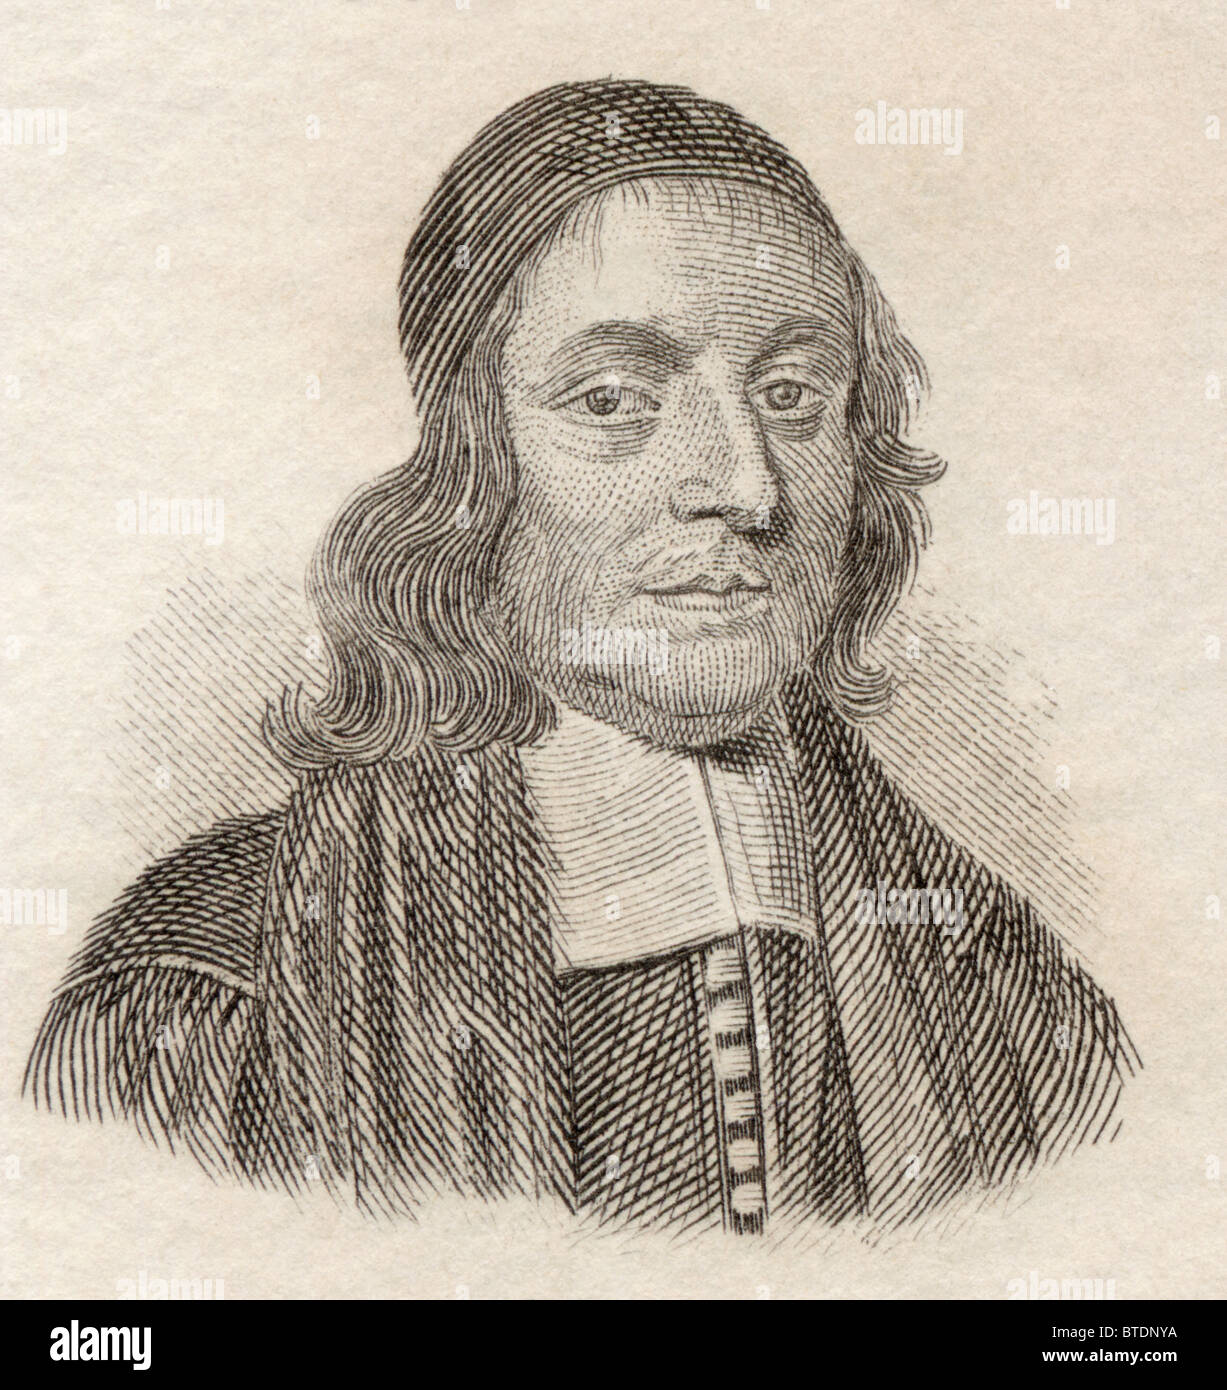 Дж математик. Джон Валлис. Джон Валлис (1616-1703). Джон Валлис математик. Дж Уоллис.